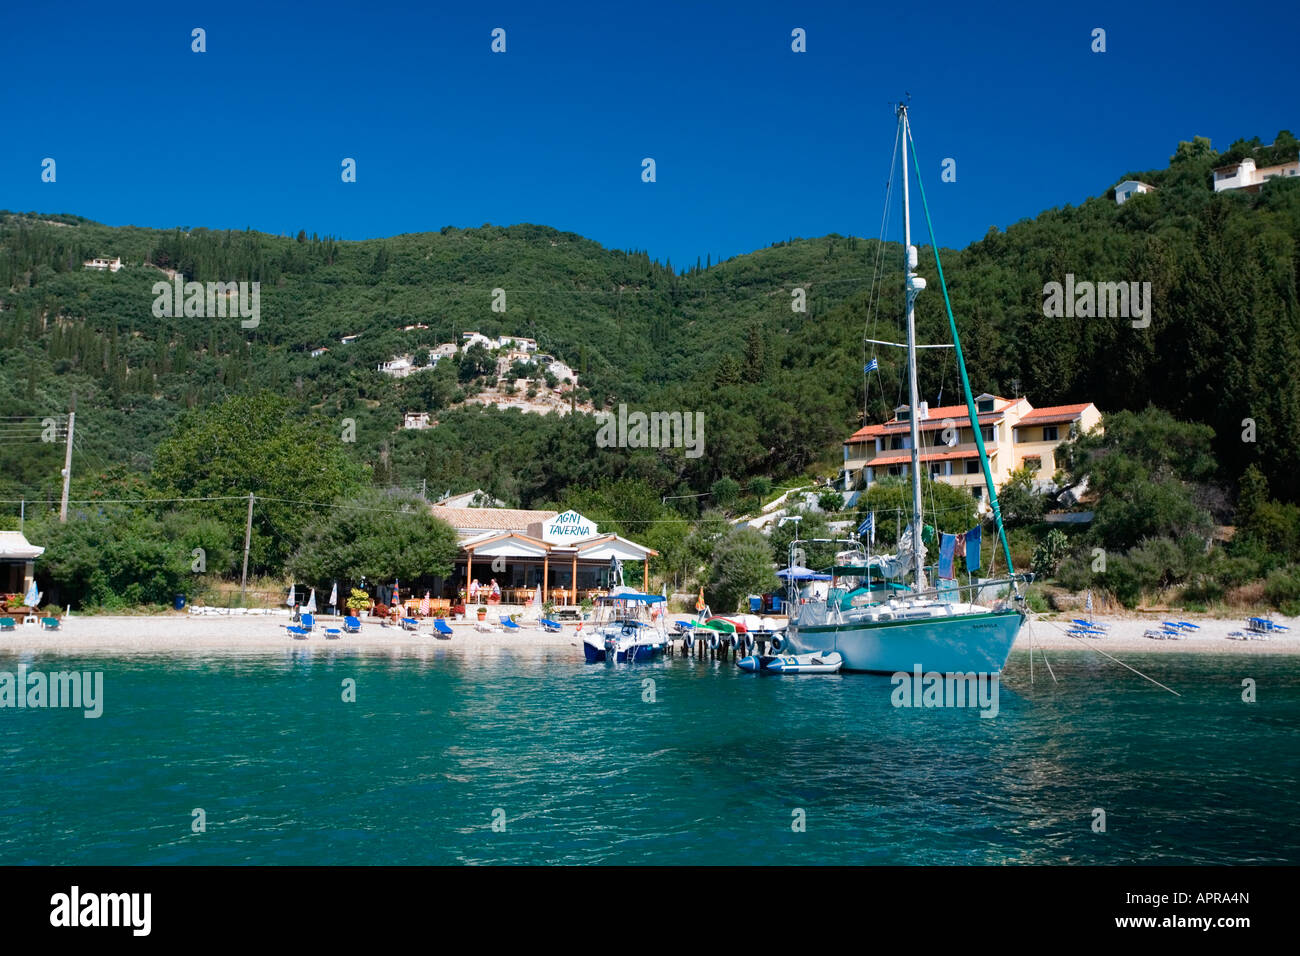 Yacht moored at Taverna Agni, Agni Bay, Corfu, Greece Stock Photo - Alamy